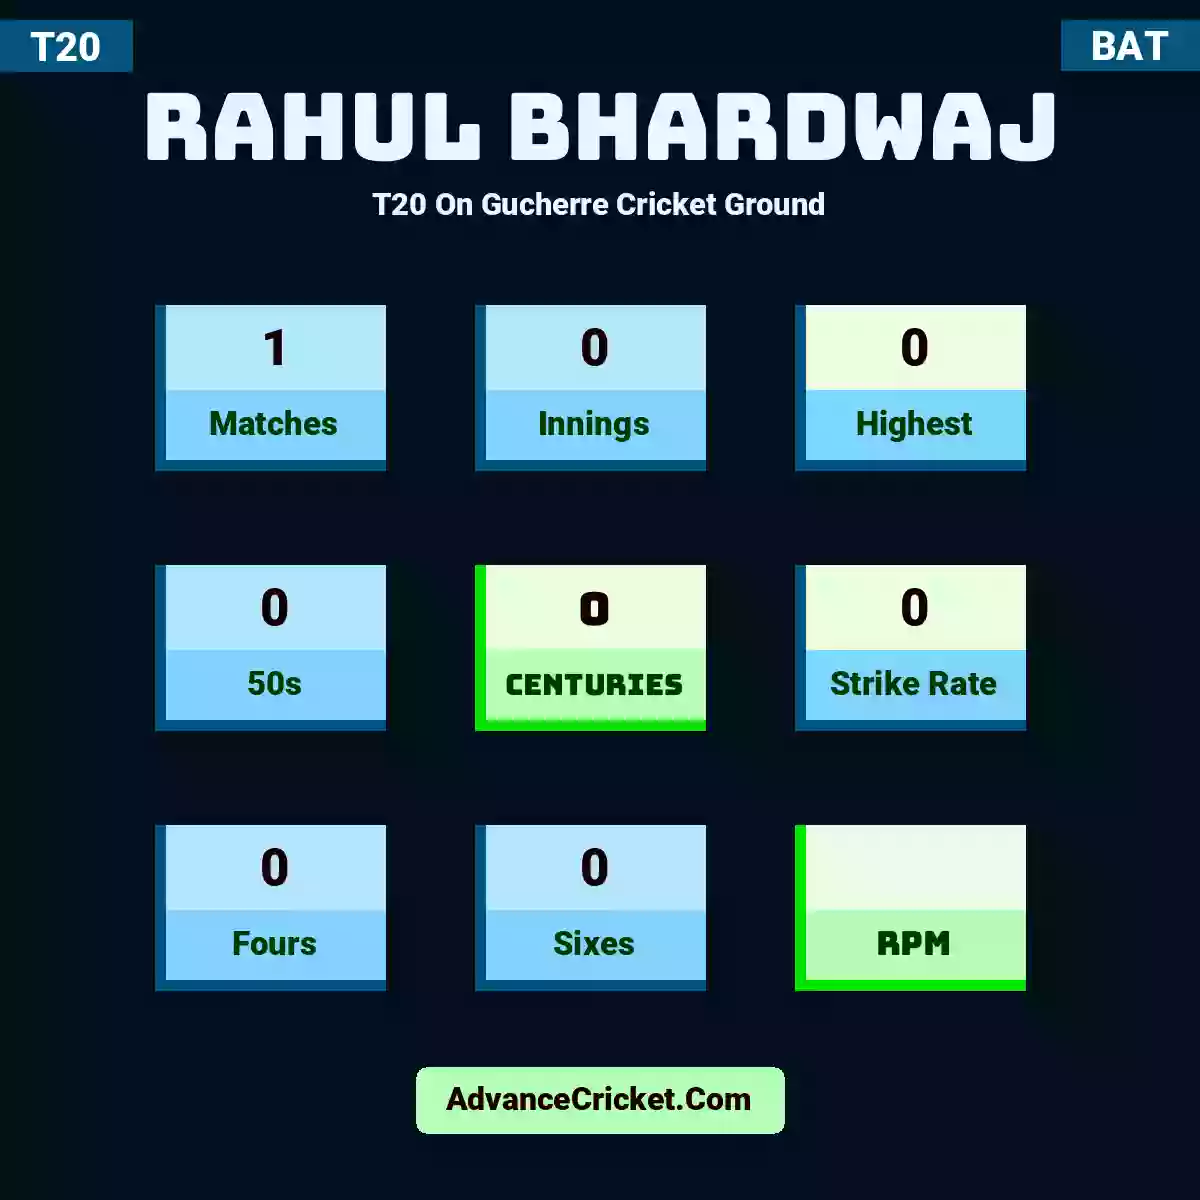 Rahul Bhardwaj T20  On Gucherre Cricket Ground, Rahul Bhardwaj played 1 matches, scored 0 runs as highest, 0 half-centuries, and 0 centuries, with a strike rate of 0. R.Bhardwaj hit 0 fours and 0 sixes.